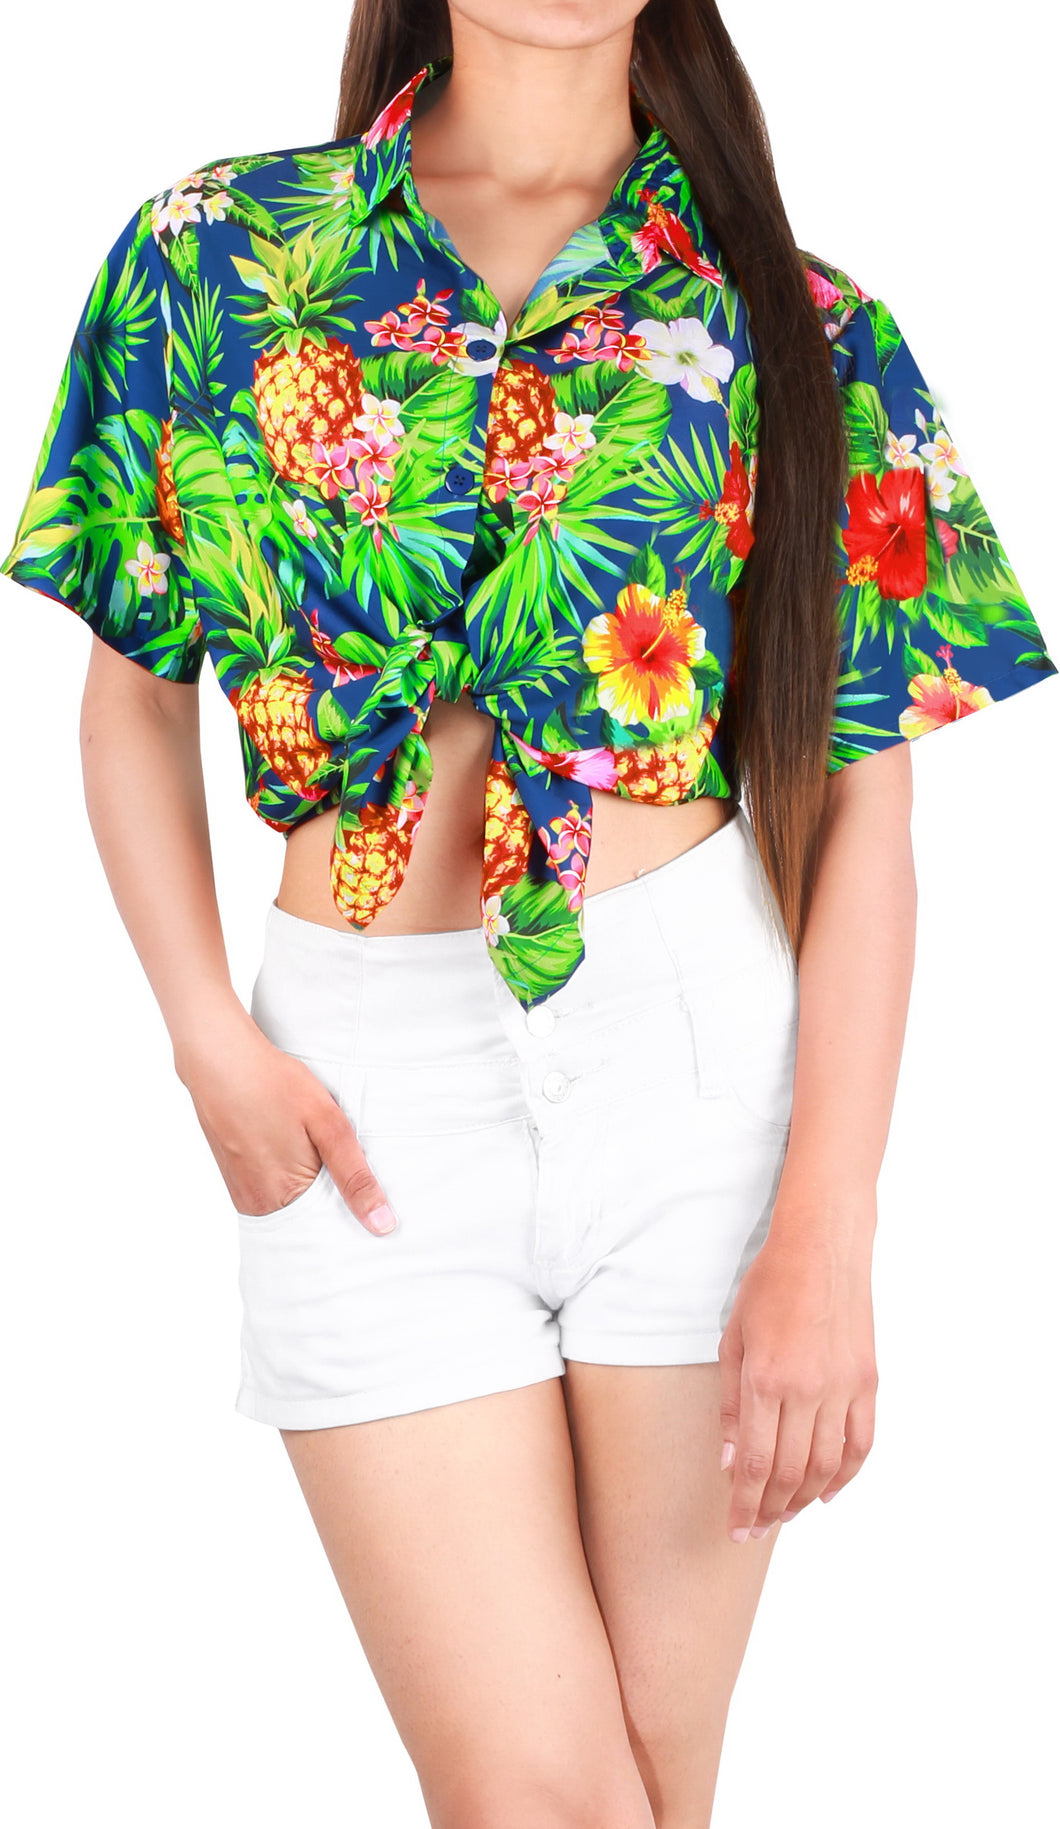 LA LEELA Women's Beachy Floral Print Hawaiian Blouse Shirt Breezy Summer Wear Short Sleeve Collar Shirt Pineapple Floral Blue